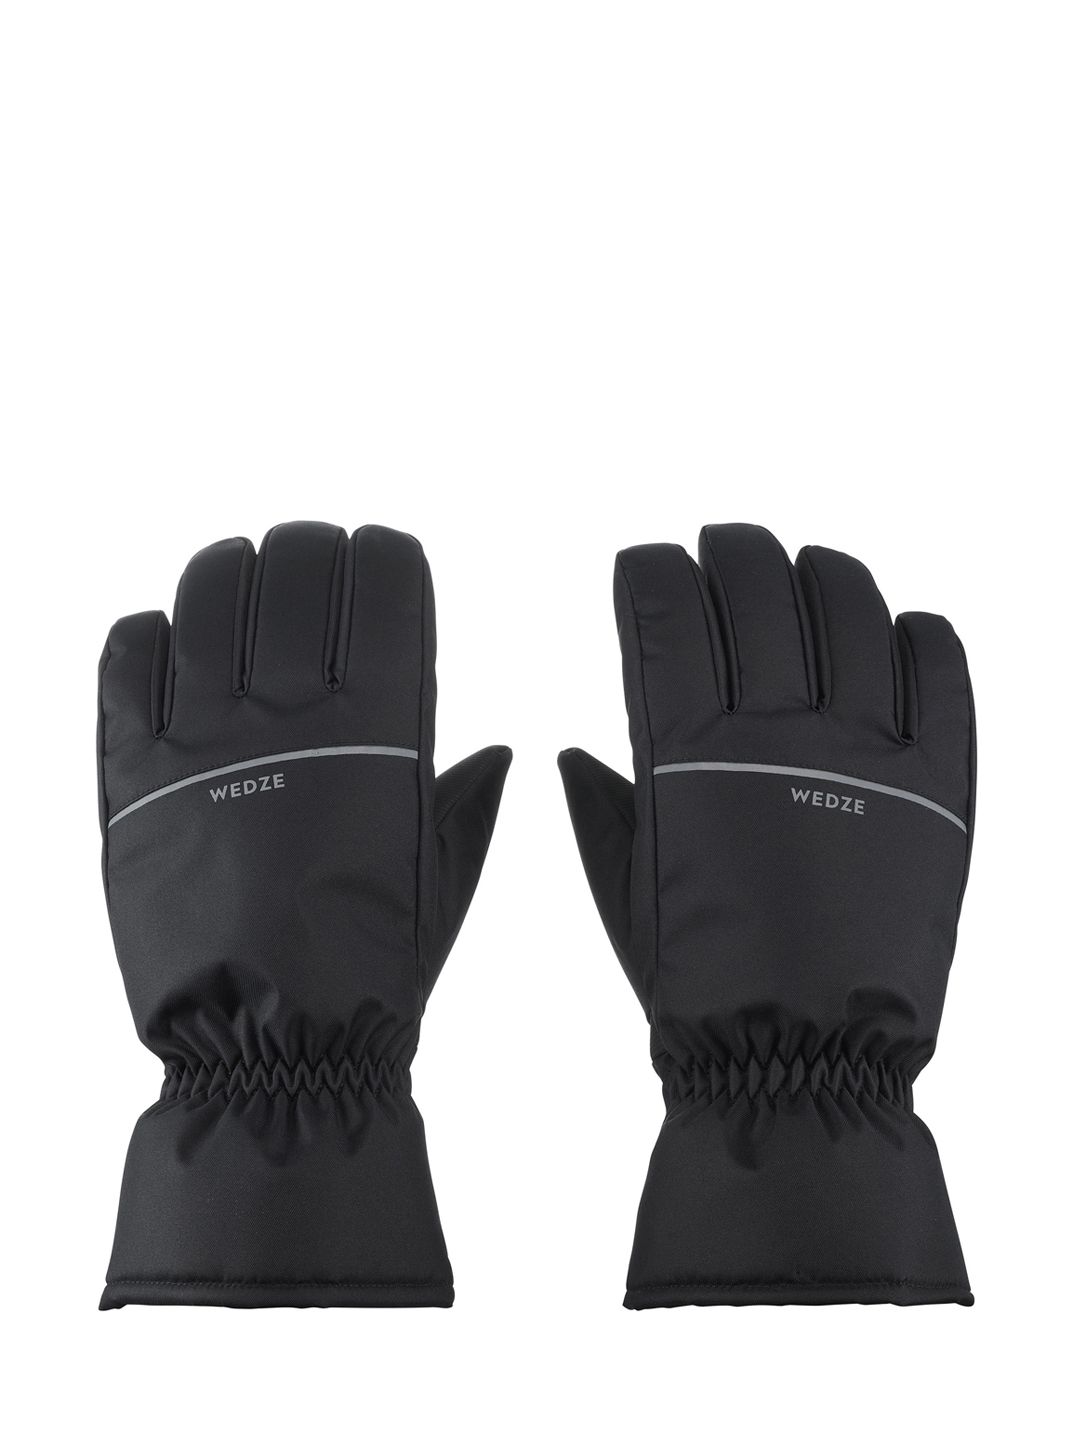 WEDZE By Decathlon Unisex Black SKI Gloves 100 Price in India